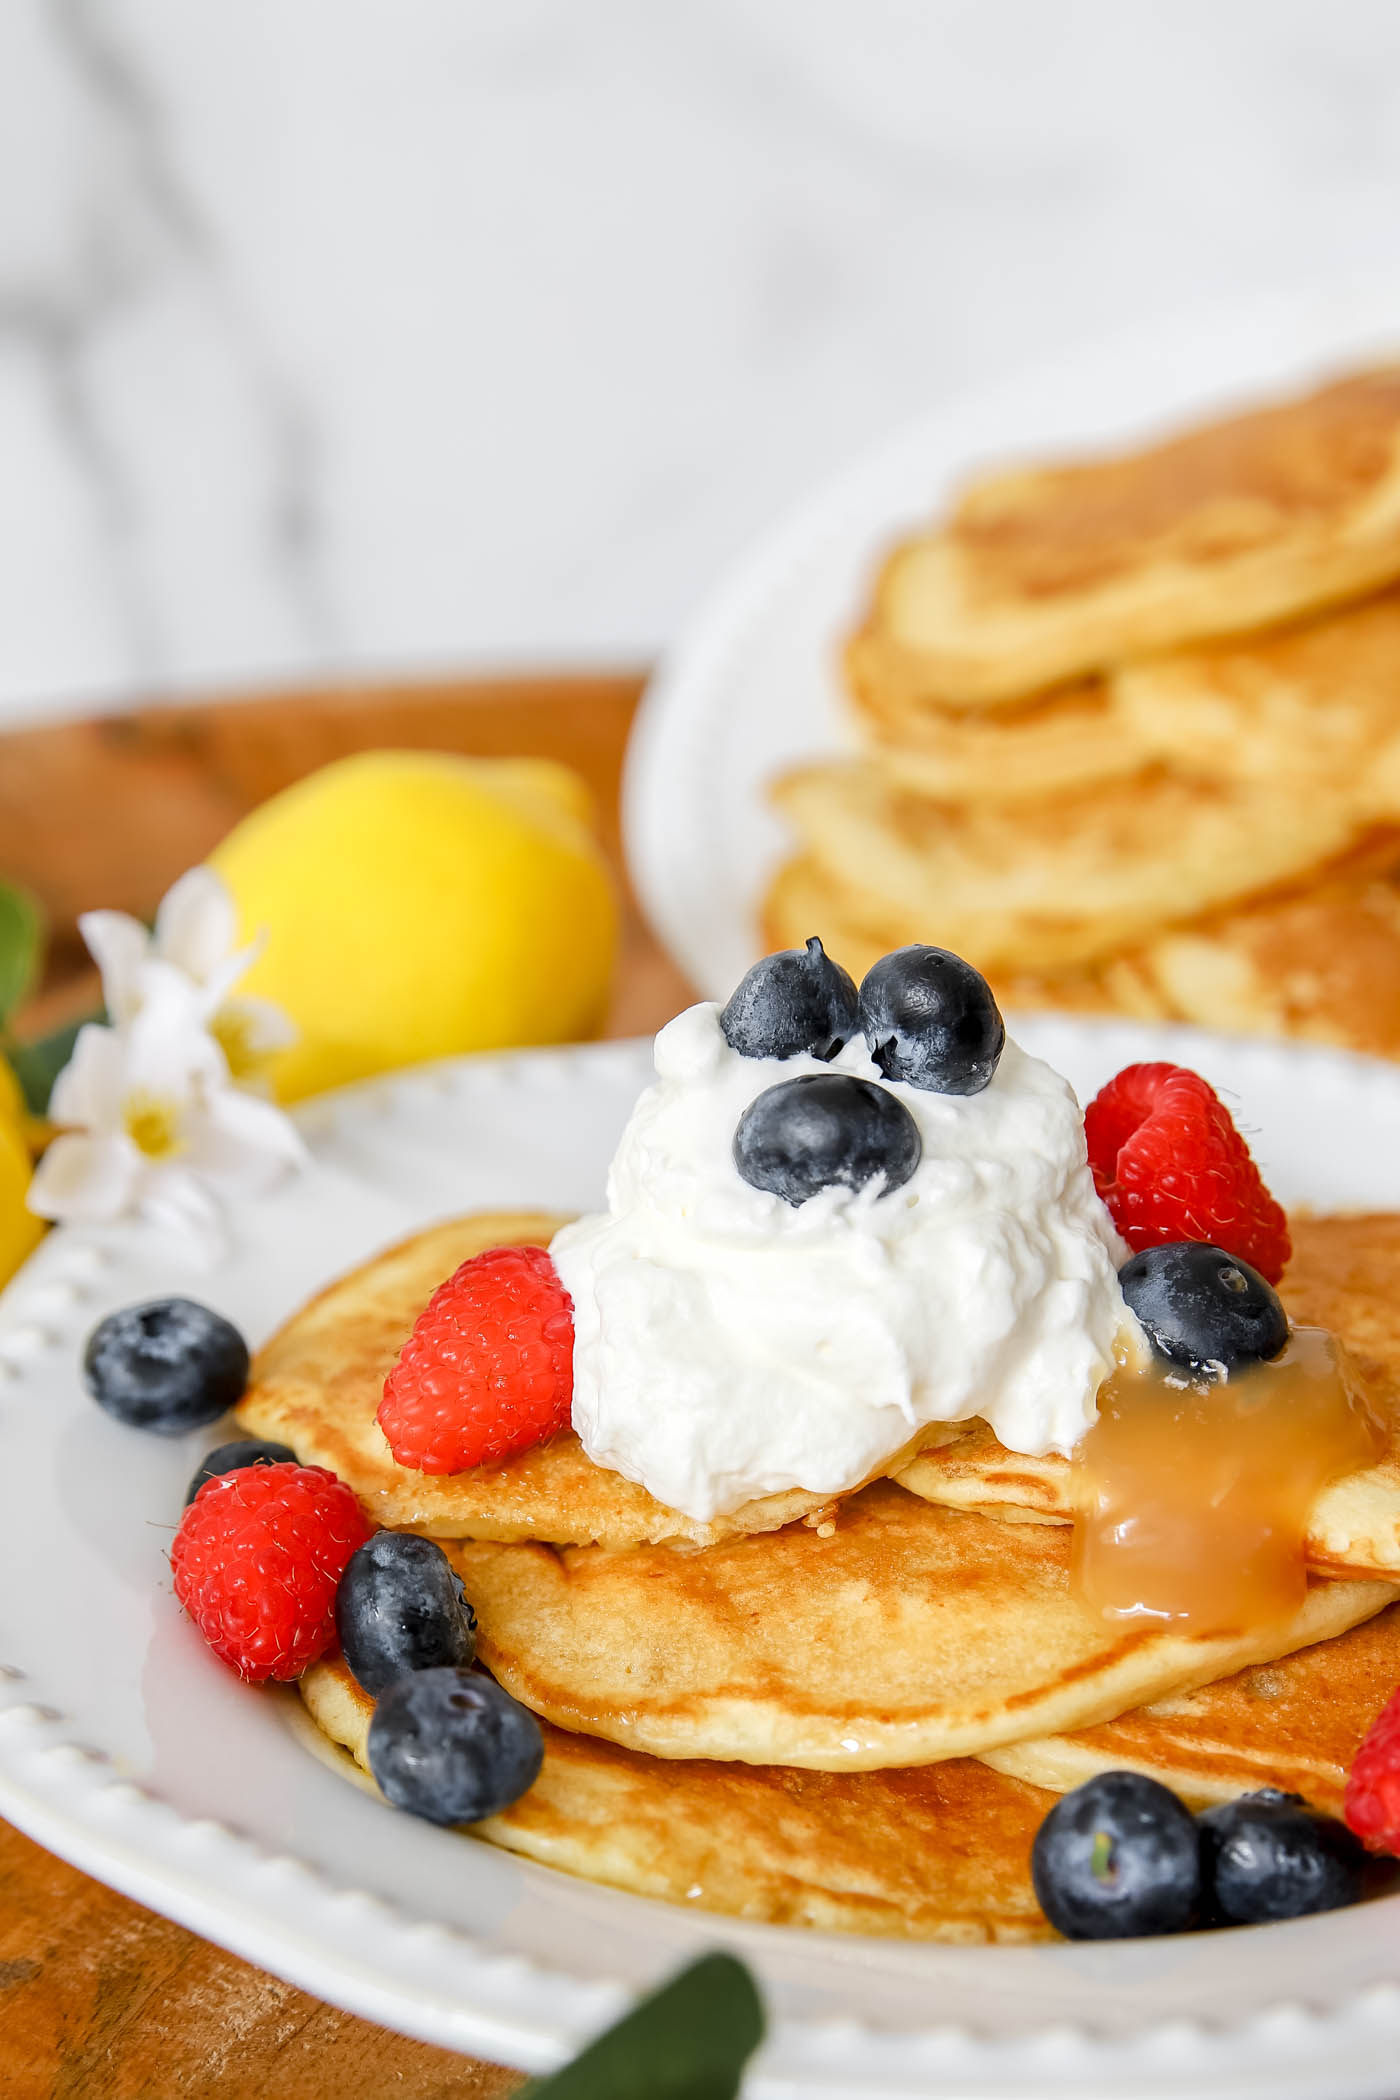 lemon ricotta pancakes with blueberries, raspberries, whipped cream and lemon curd toppings.